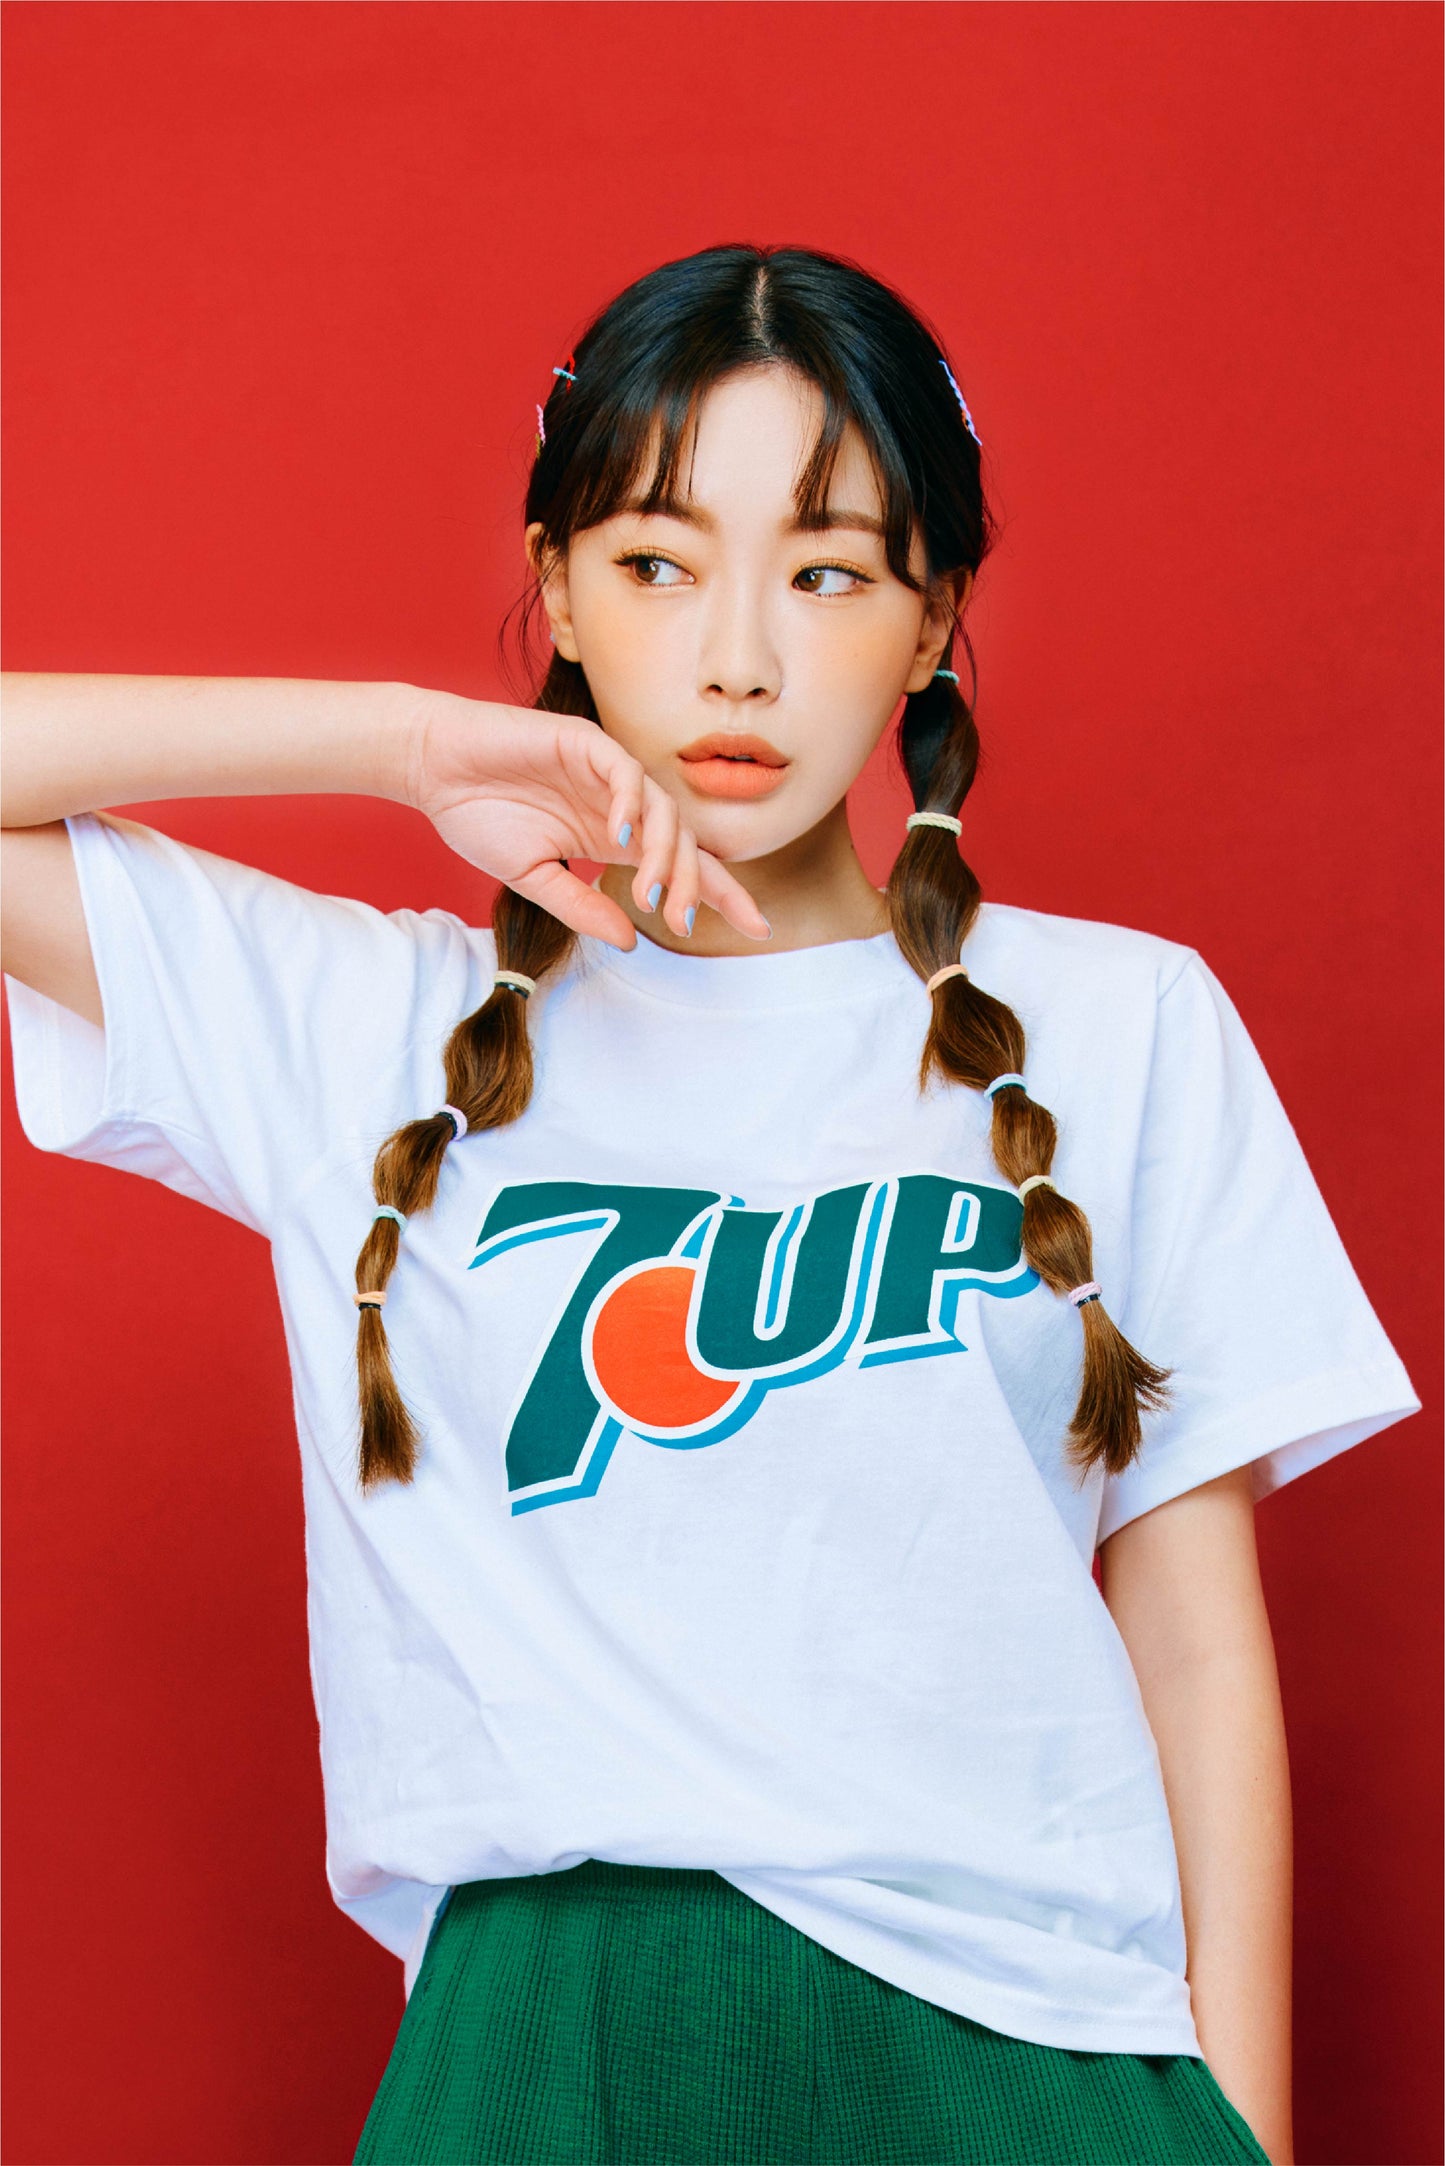 Seven up T-shirt 0329（セブンアップTシャツ）